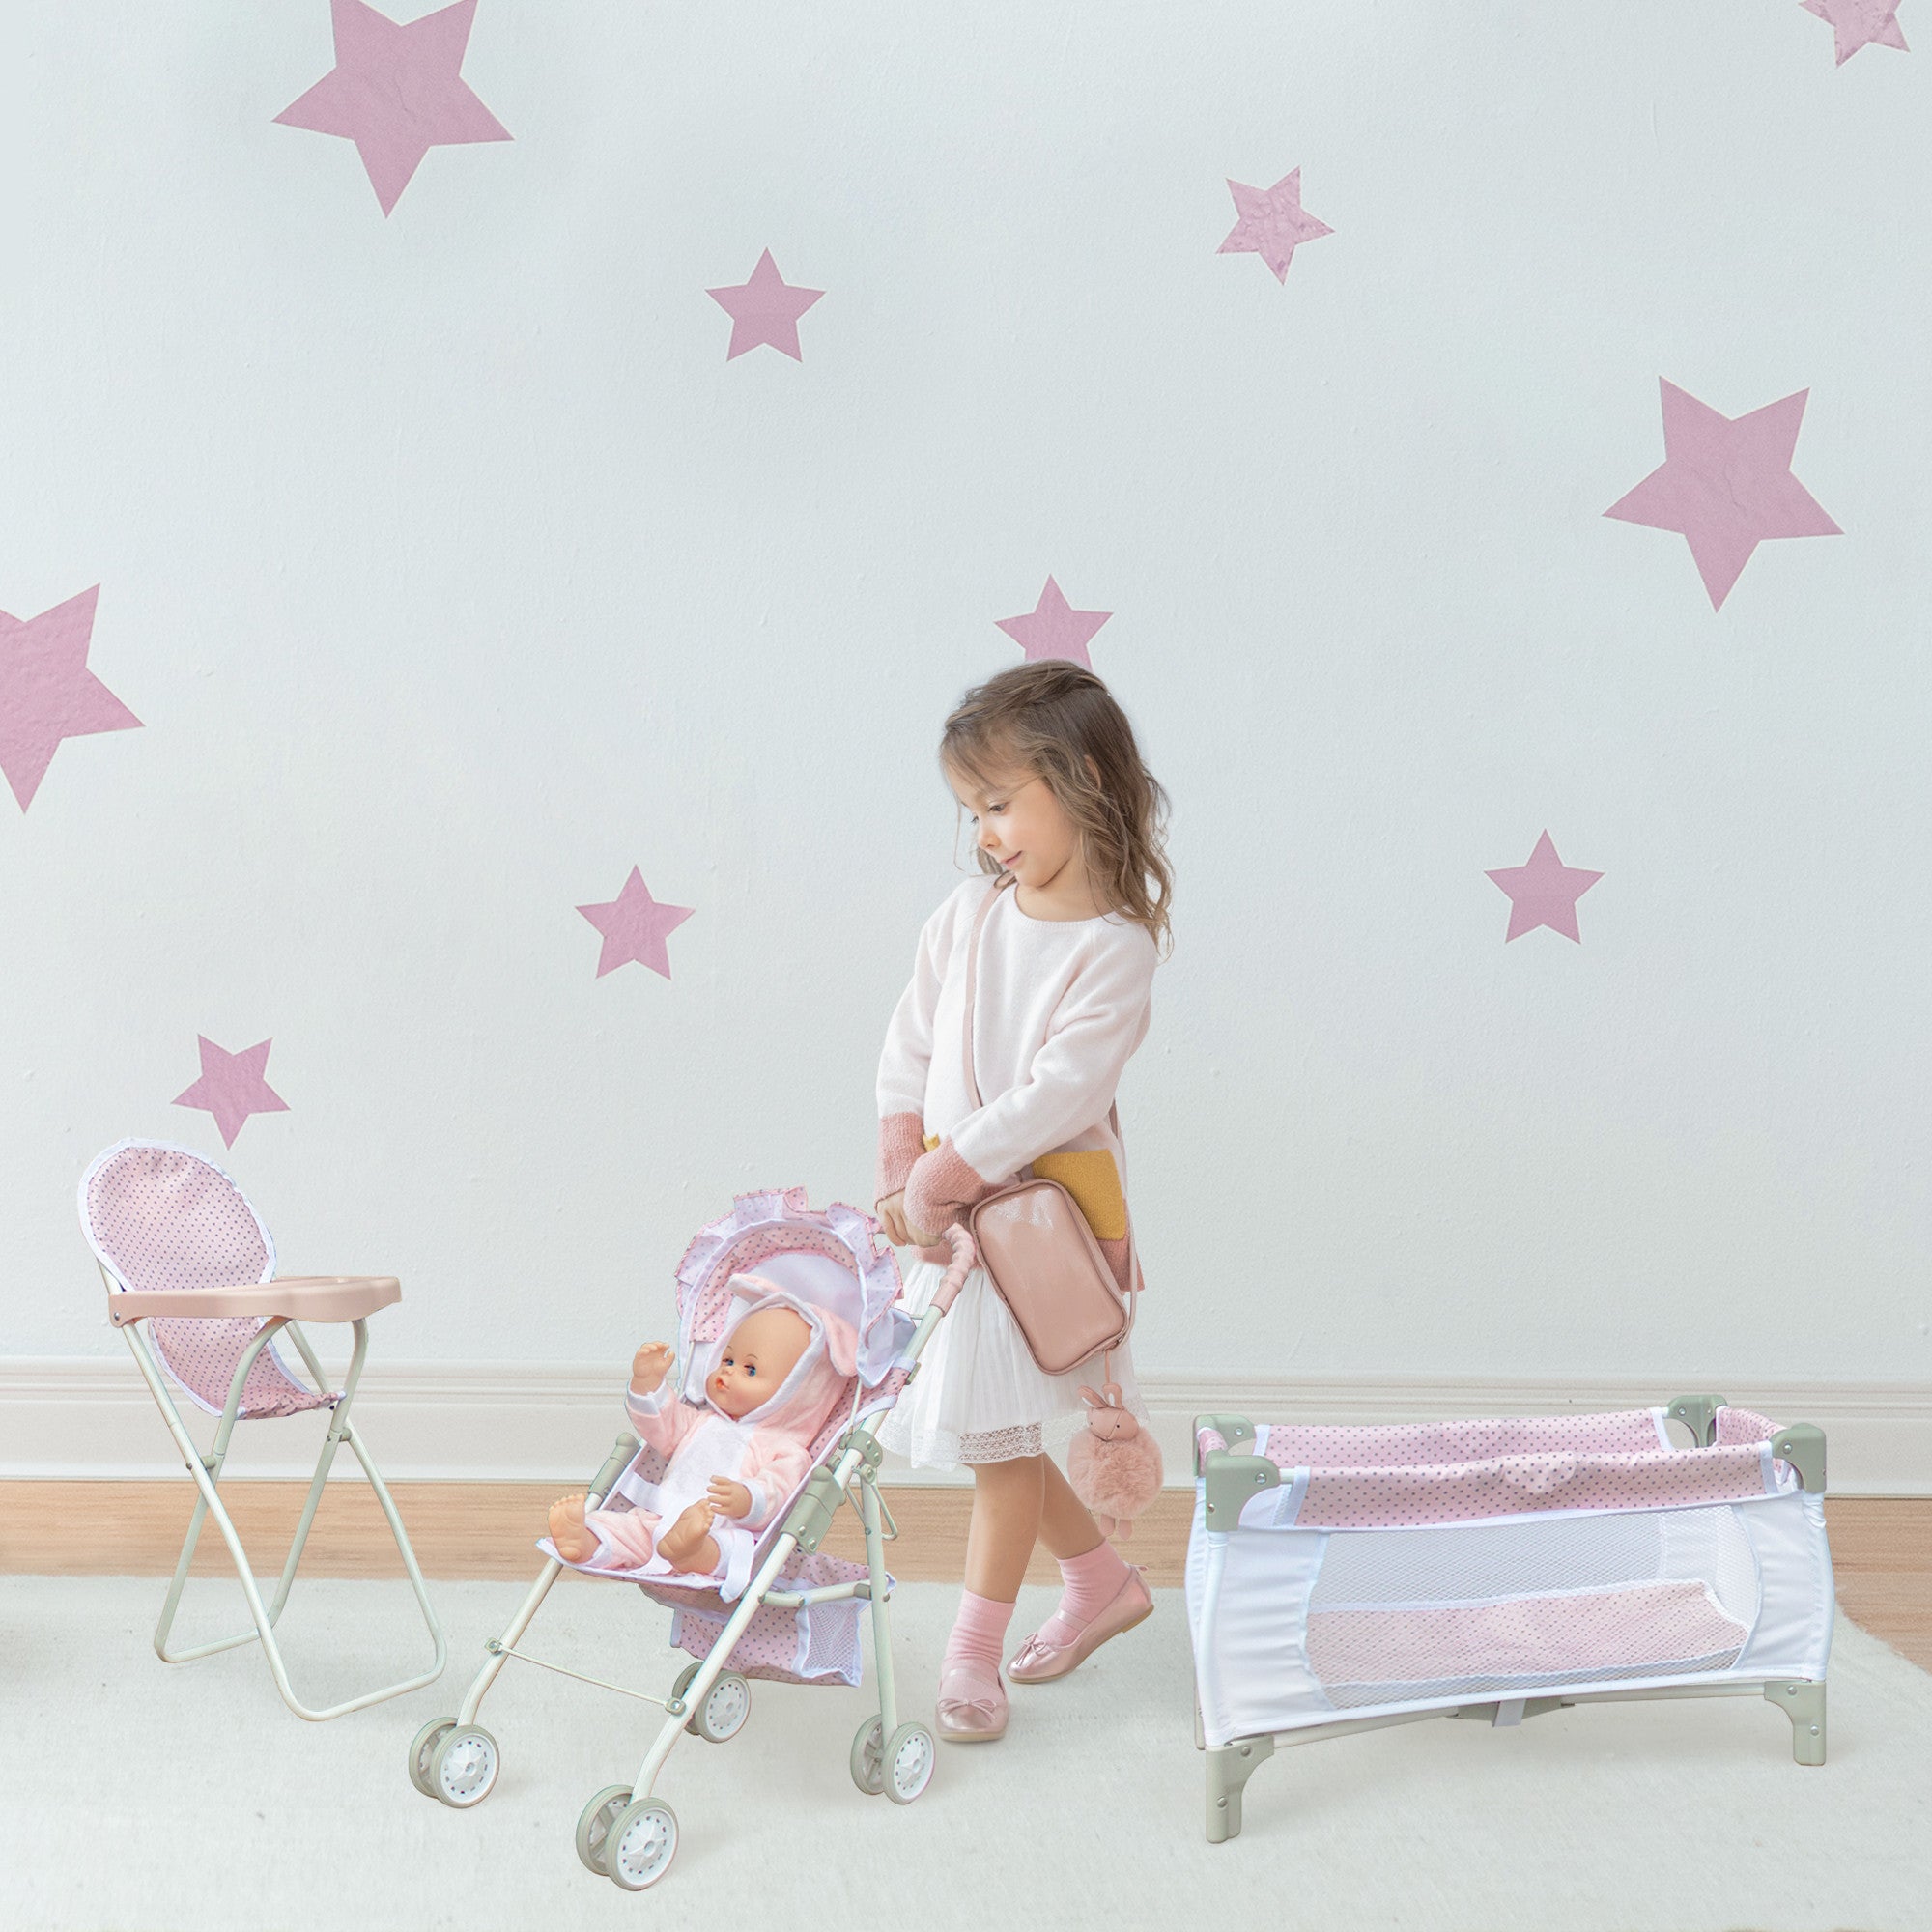 Olivia's Little World Polka Dots Princess 3-in-1 Baby Doll Nursery Set, Pink/Gray